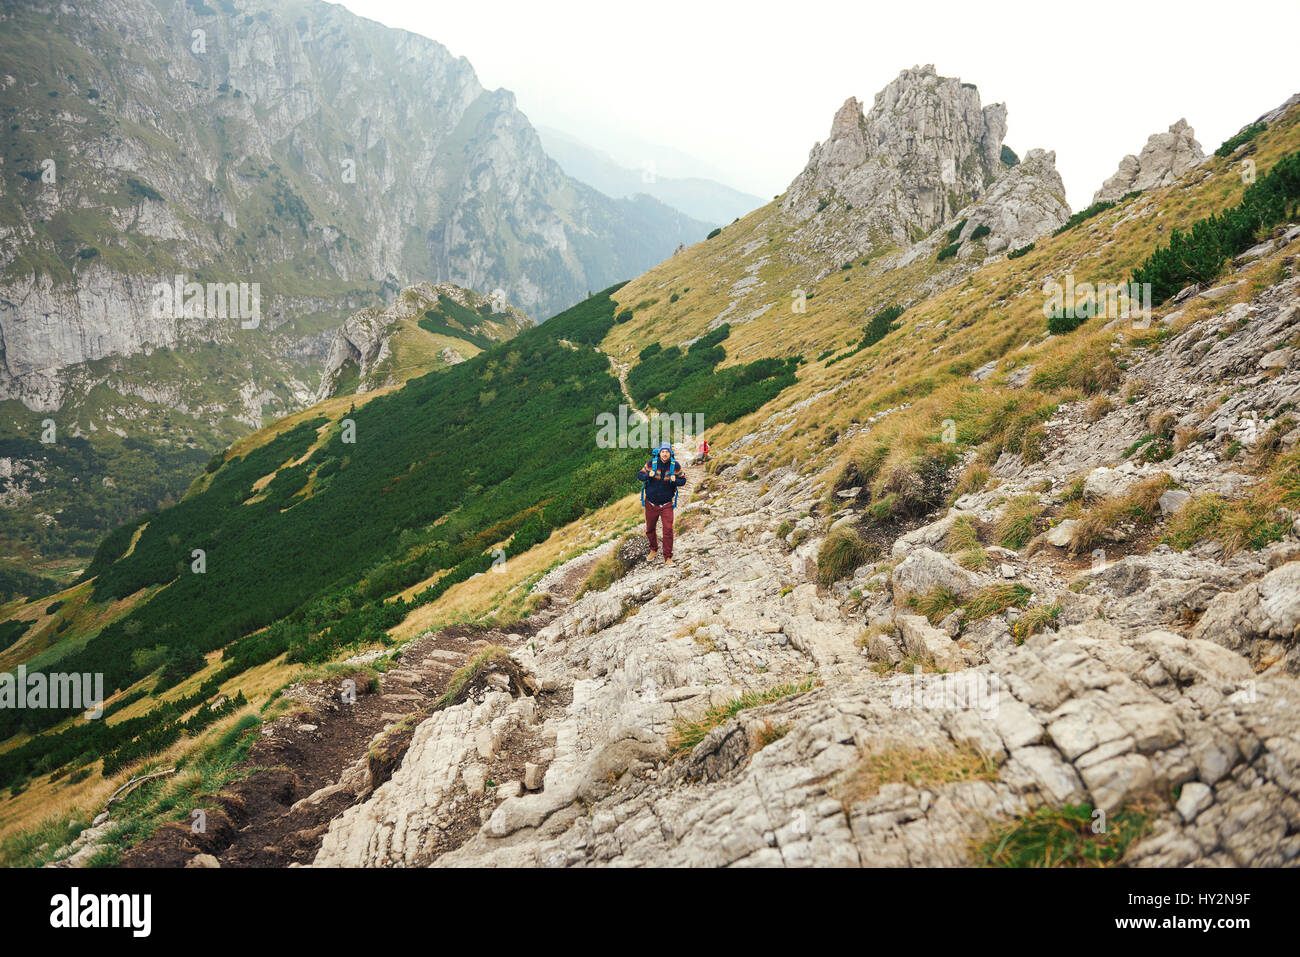 Hikers walking along a trail in rugged mountain terrain Stock Photo